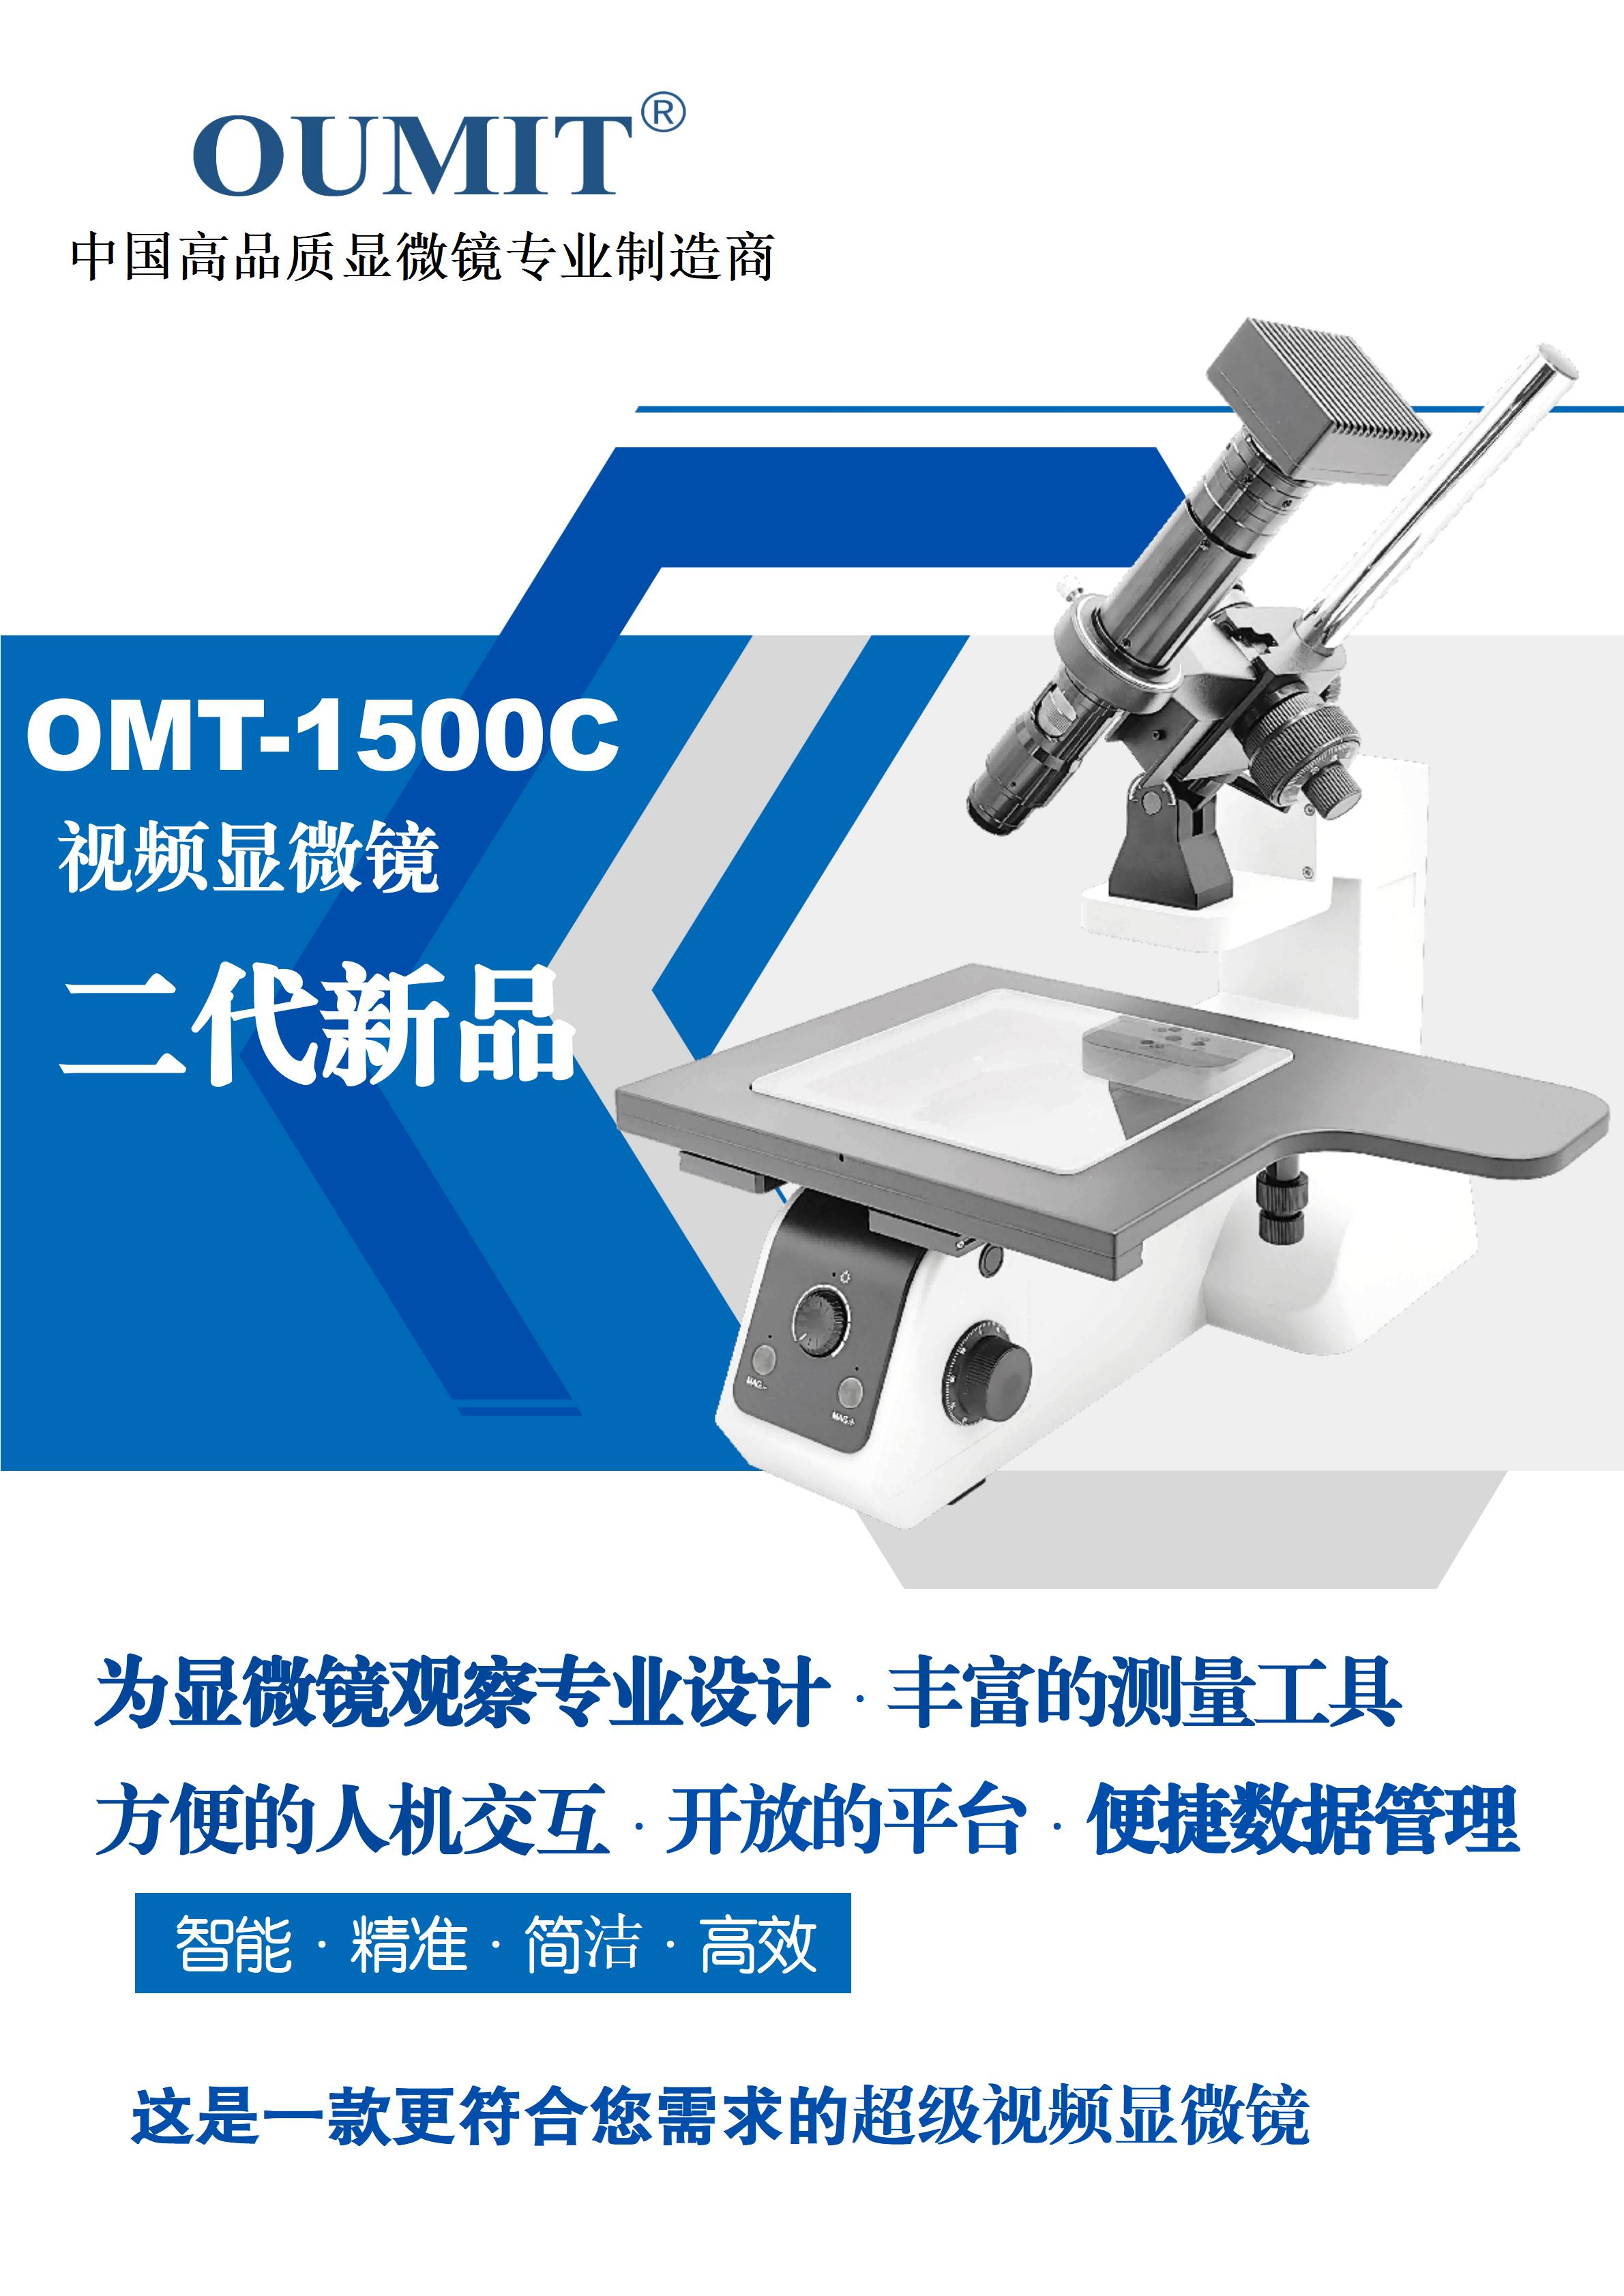 OMT-1500C超级视频苏州测量显微镜-2023_01.jpg